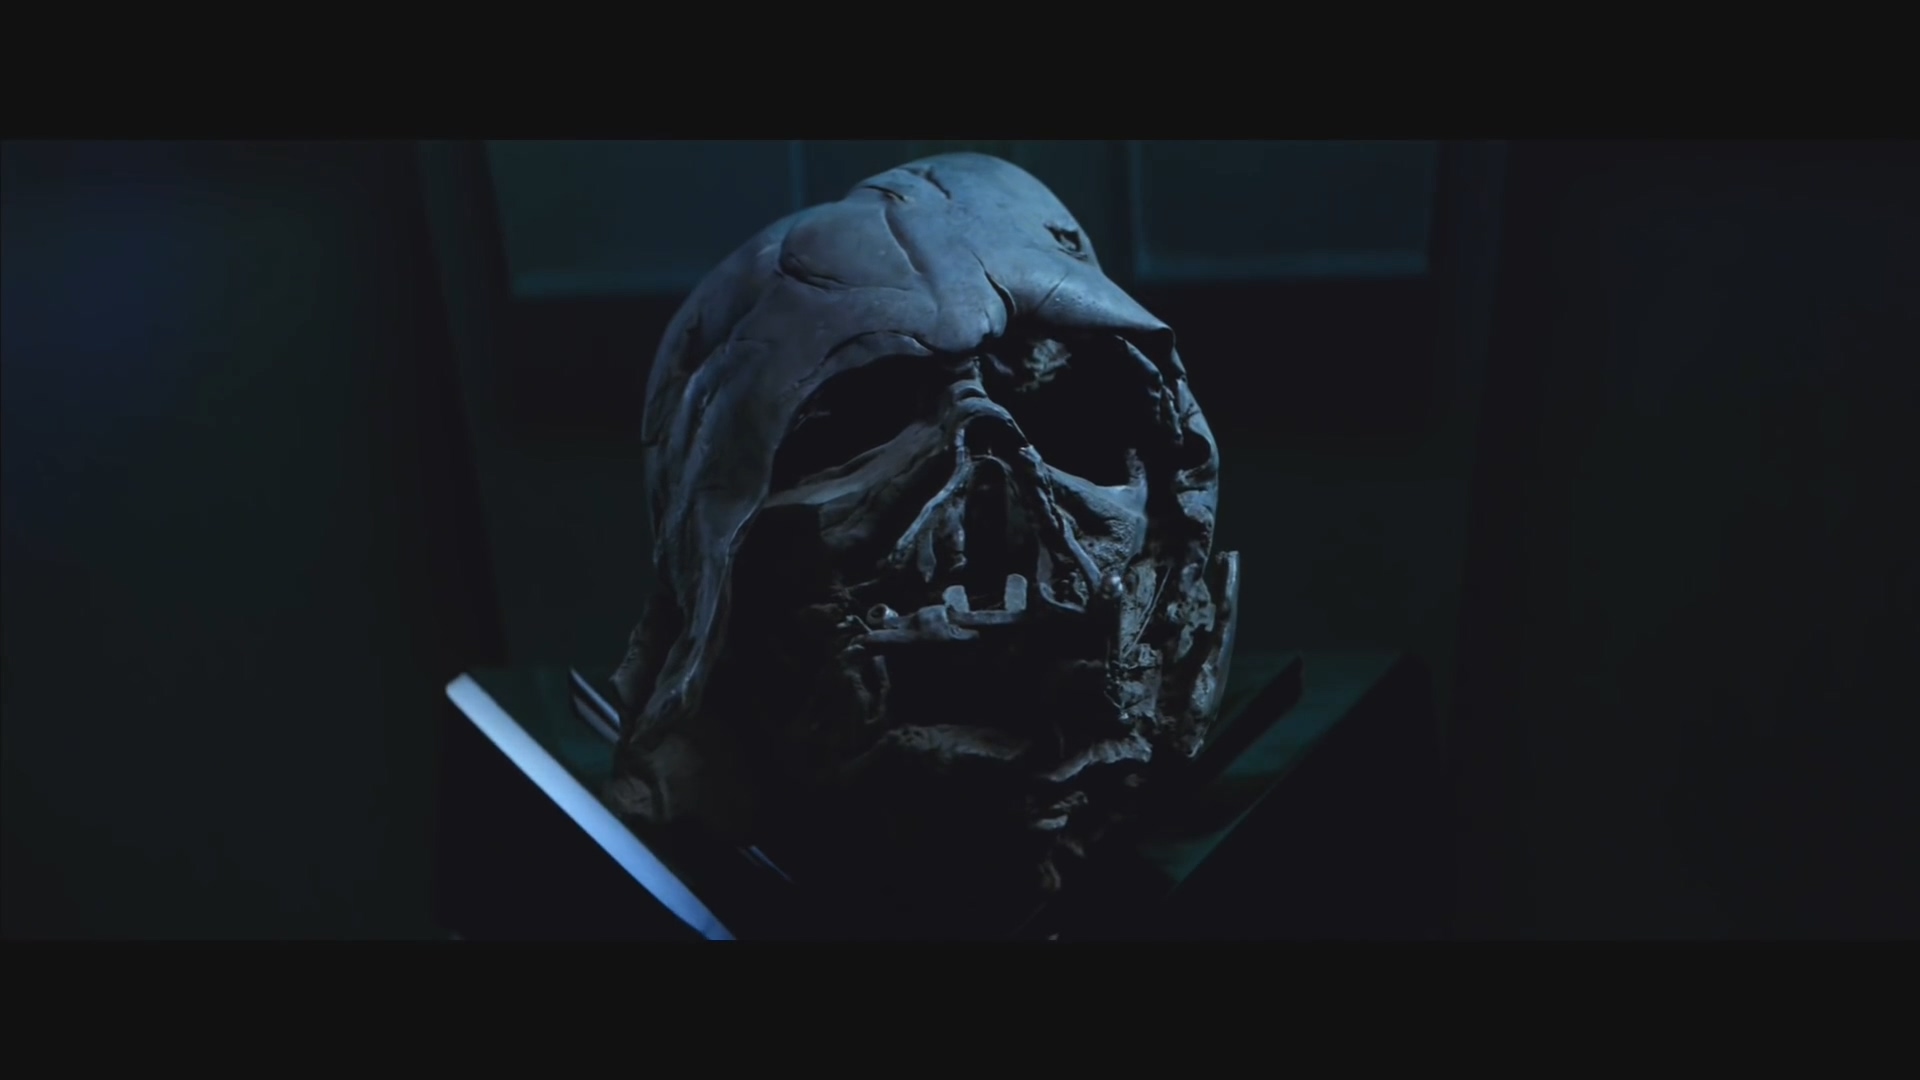 Star Wars_ The Force Awakens Trailer (Official) - YouTube (1080p).mp4_20151226_144622.828.jpg